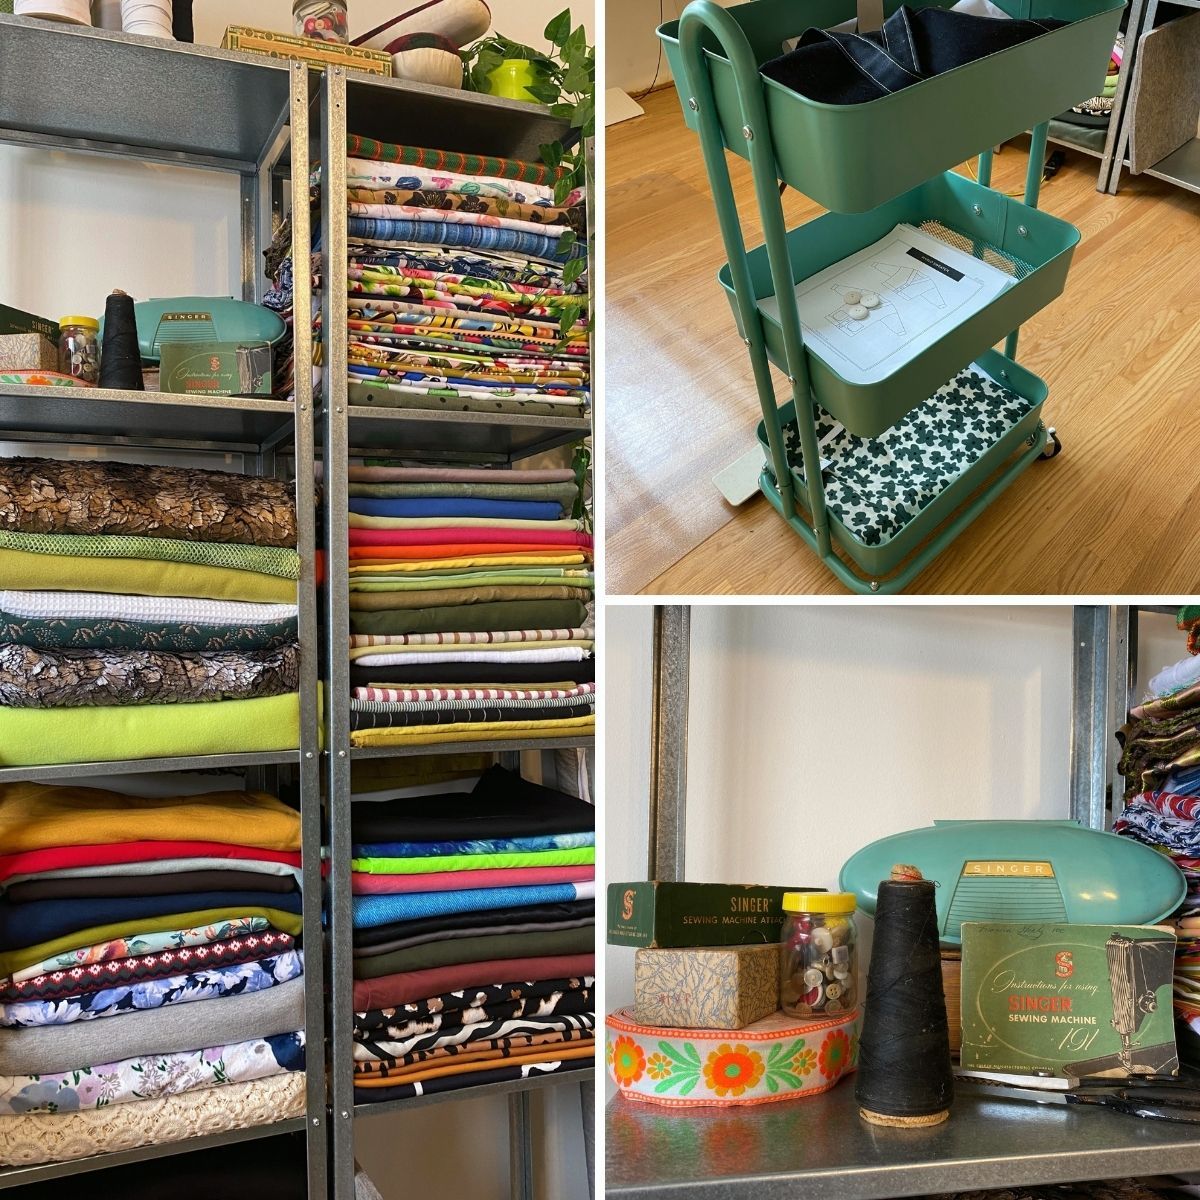 Sew Organized: Sewing Pattern Storage - Sew Daily